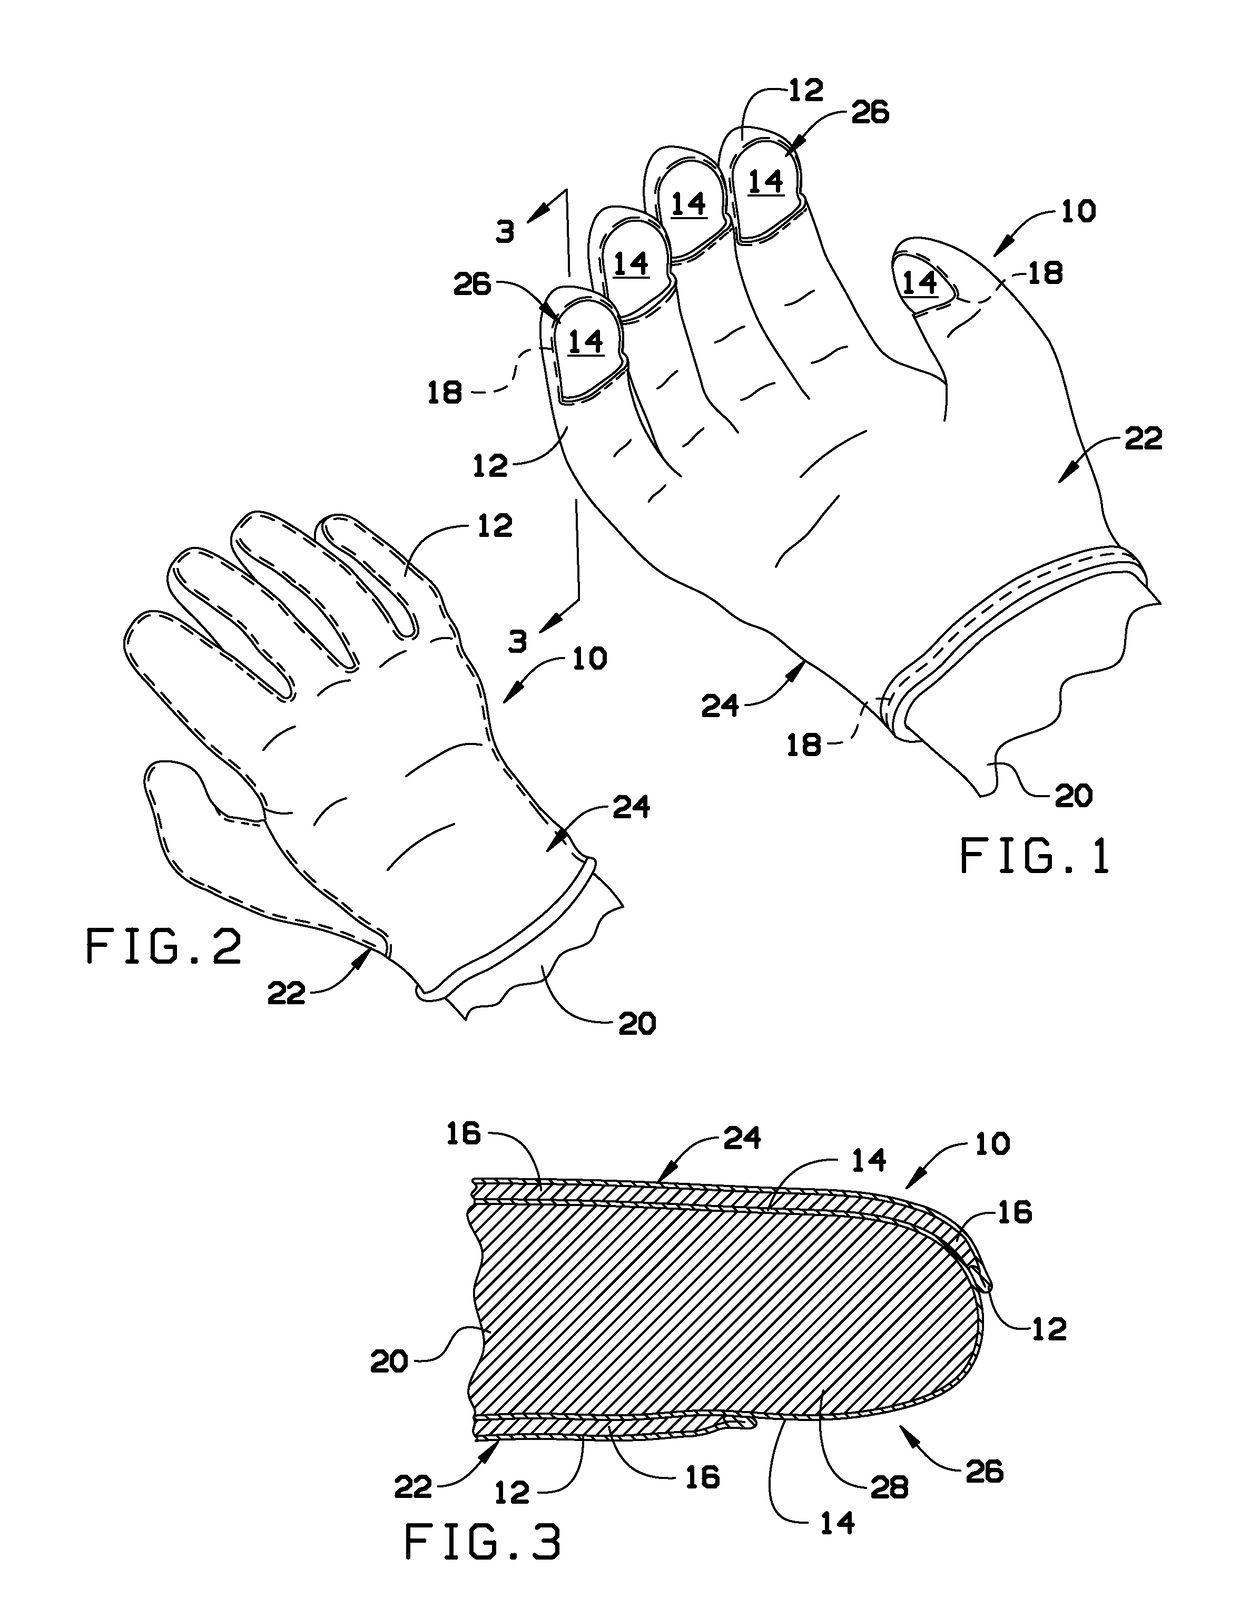 Glove providing grip and dexterity